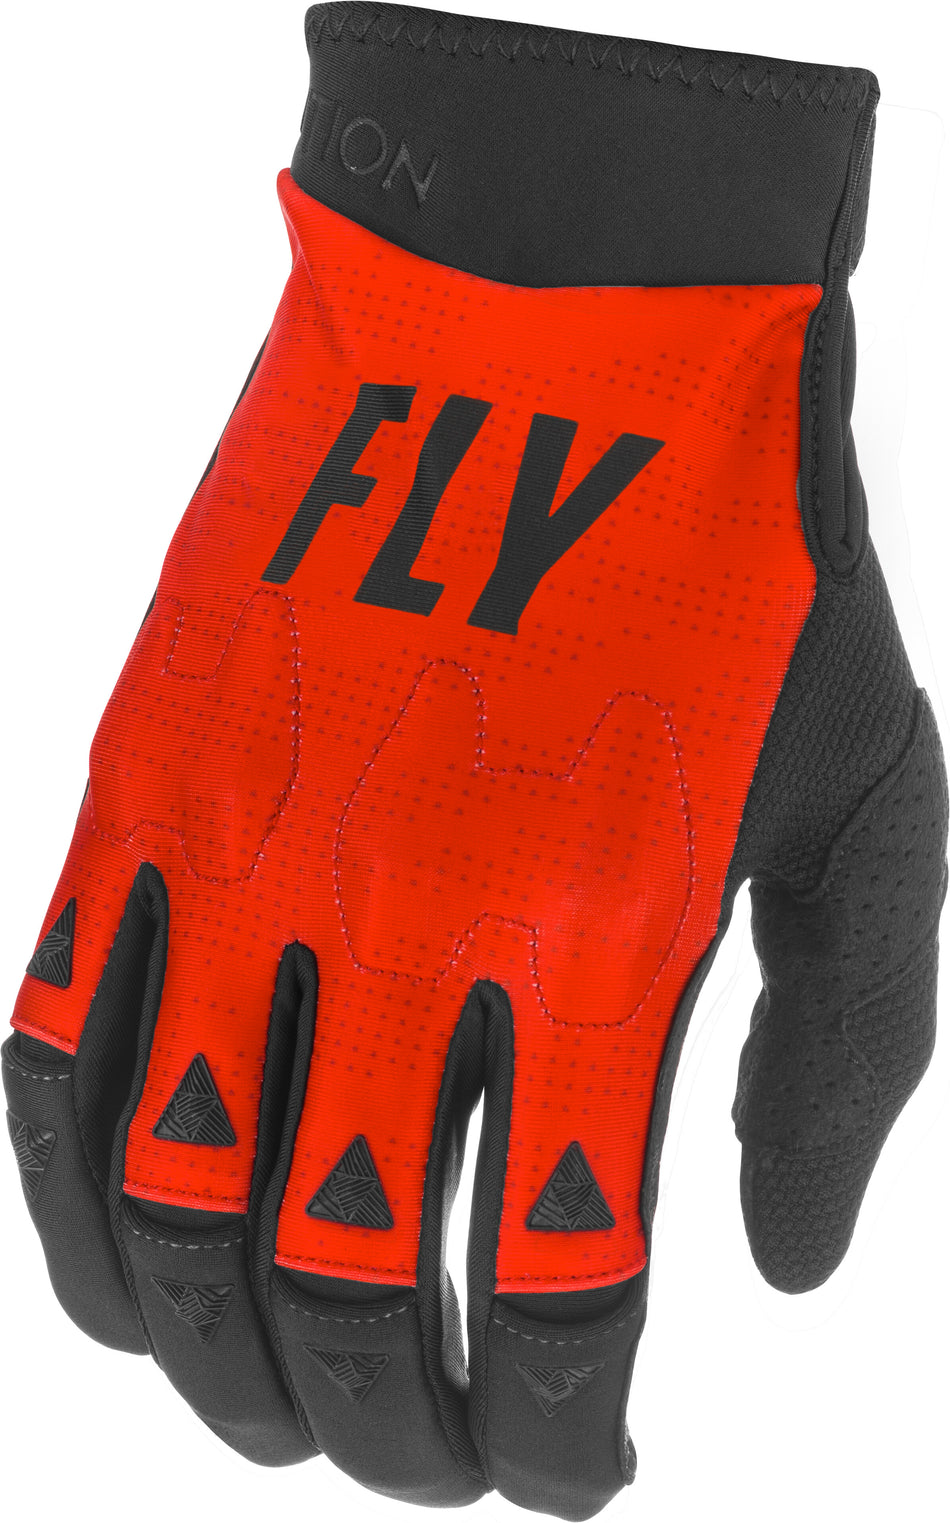 FLY RACING Evolution Dst Gloves Red/Black/White Sz 10 374-11210